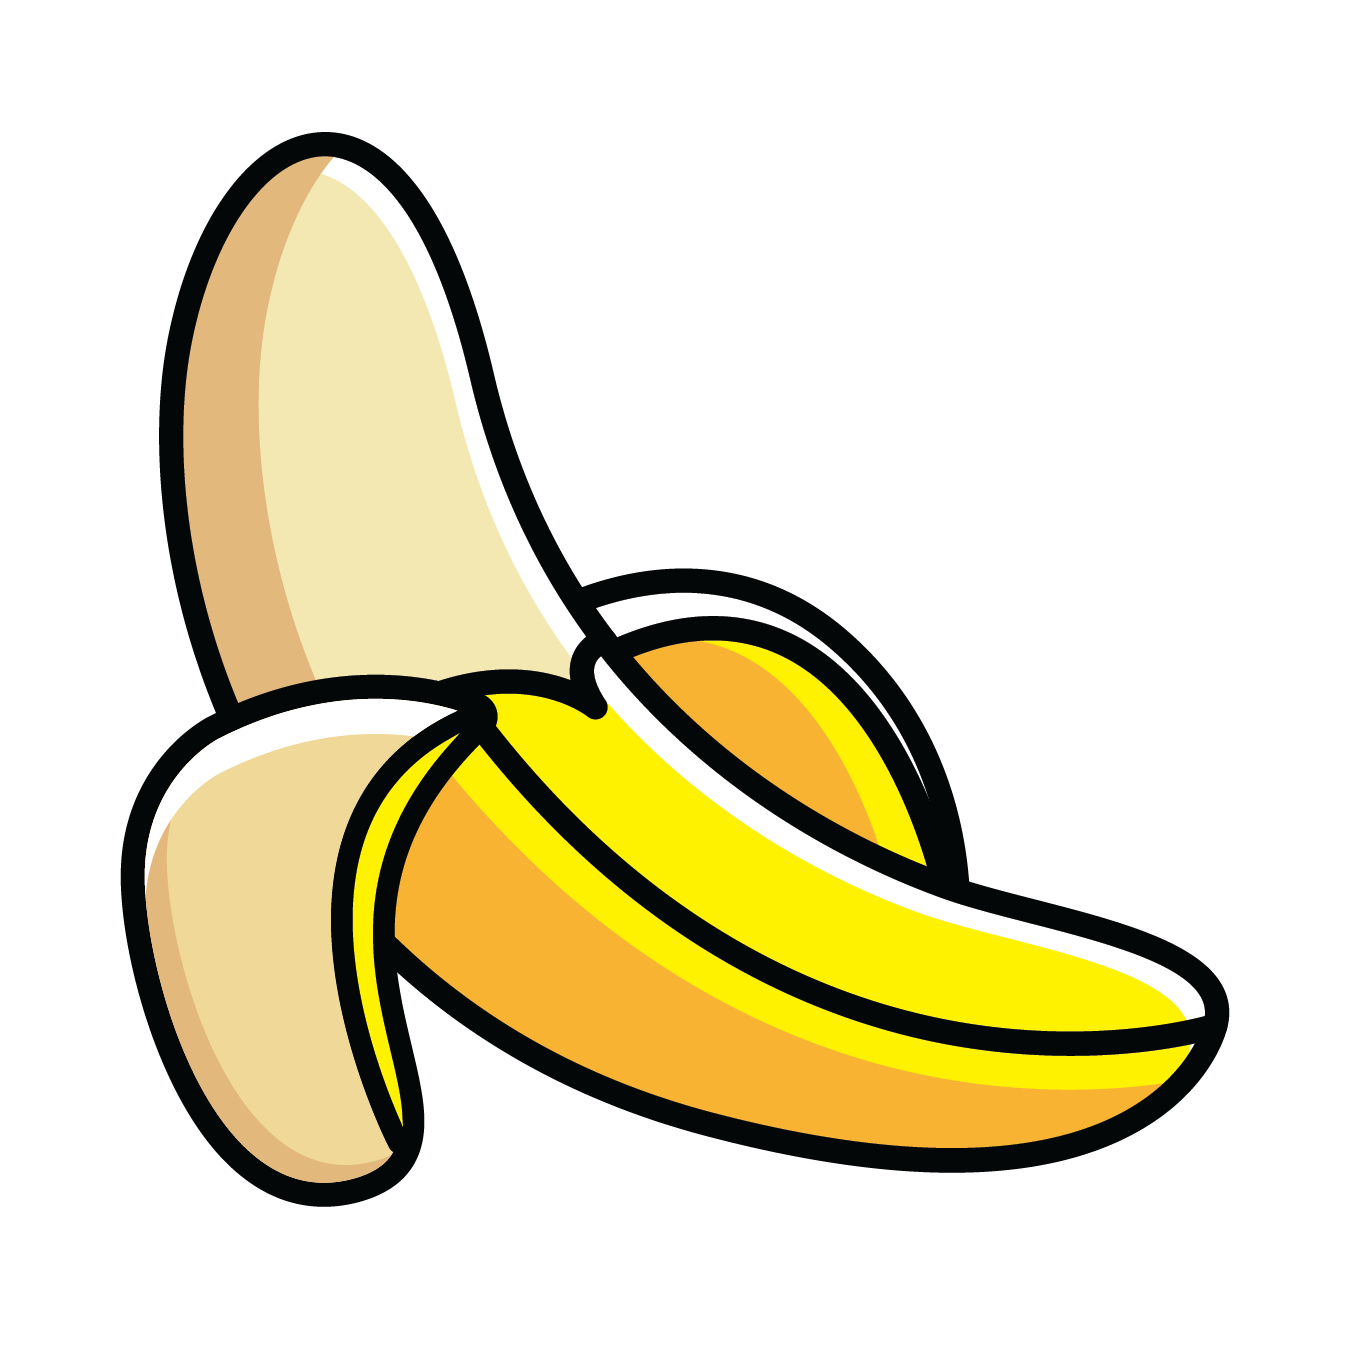 Emoji clipart banana. 